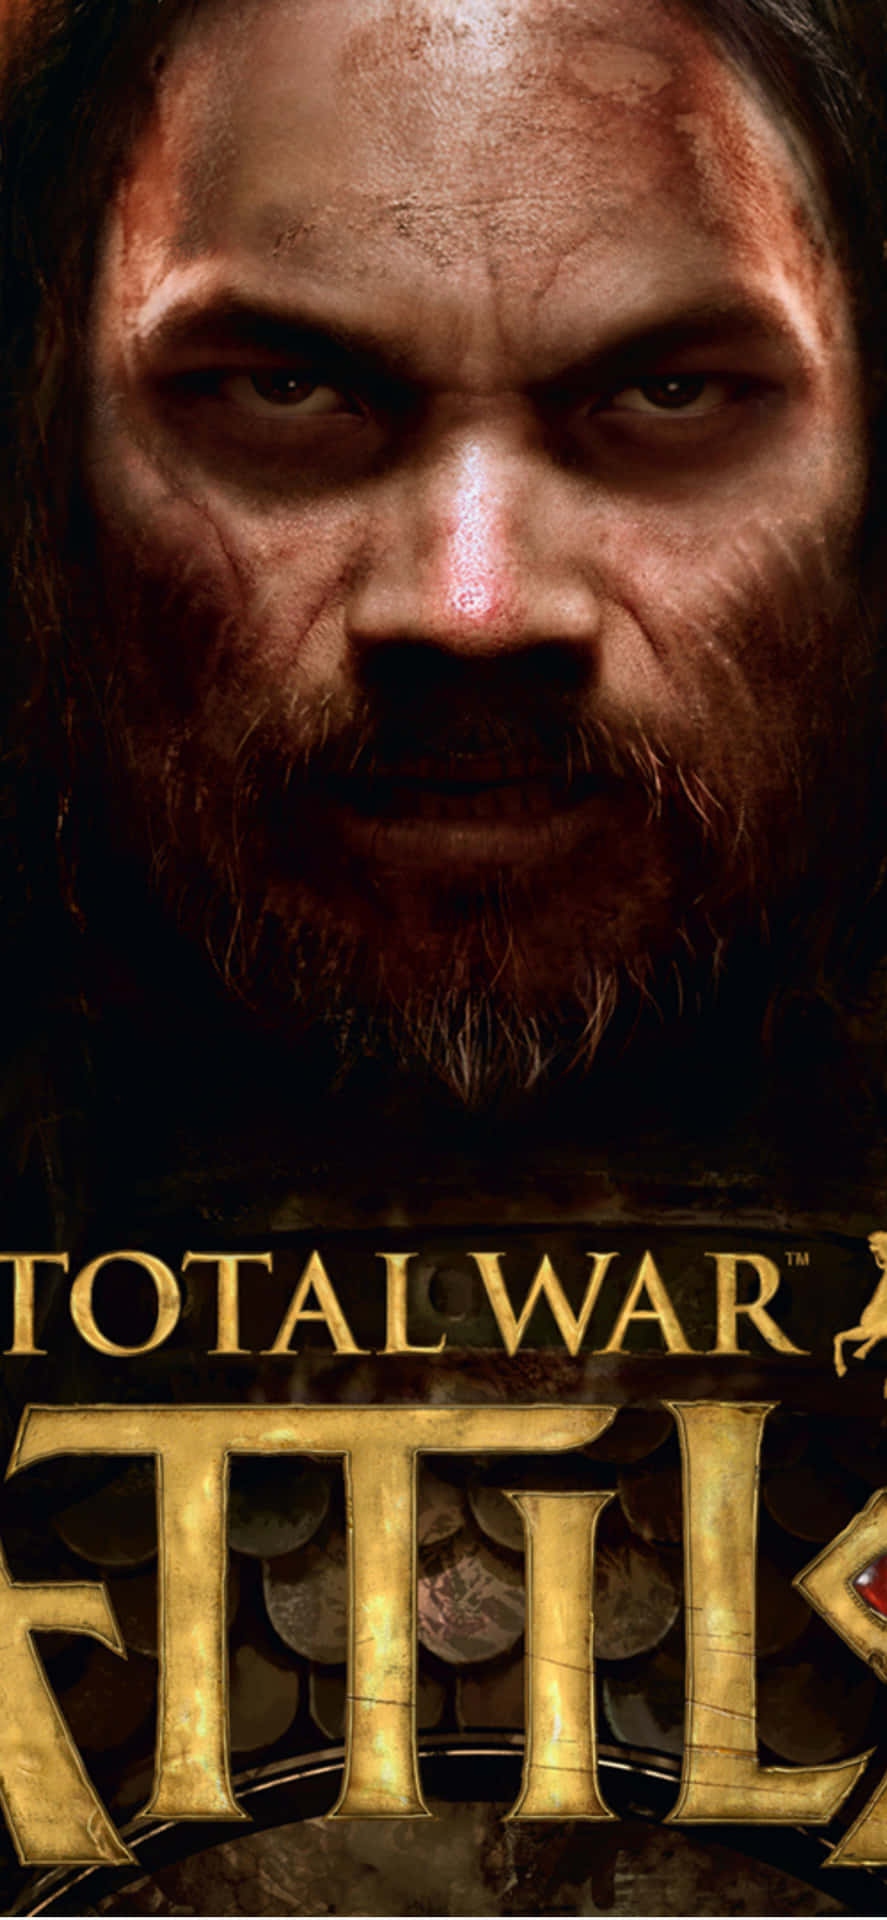 iPhone XS Max Total War Attila Close Up Background